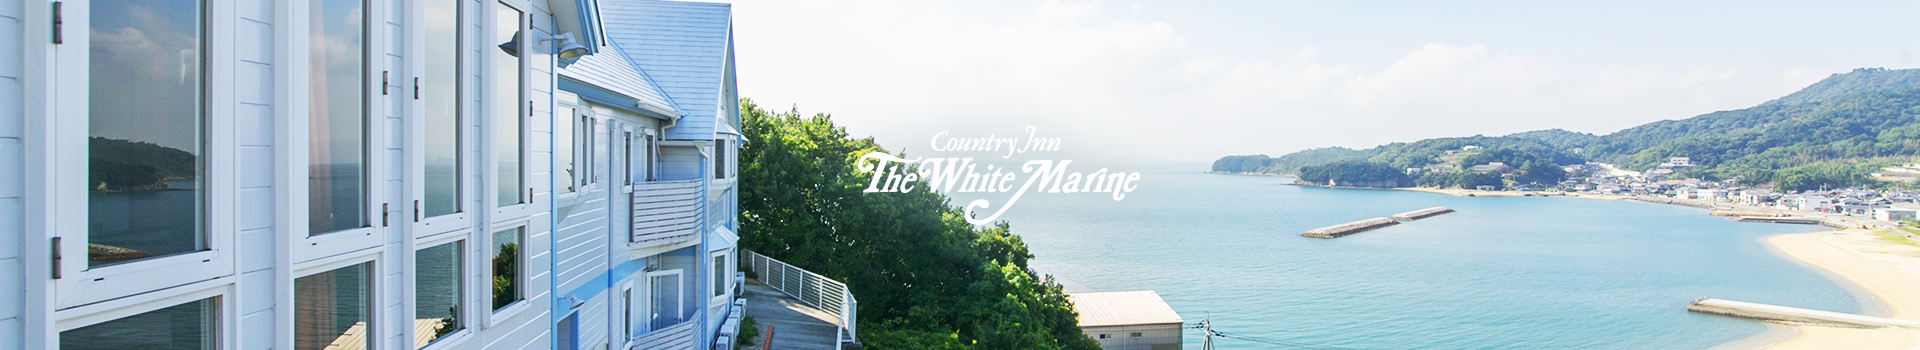 Country Inn The White Marine